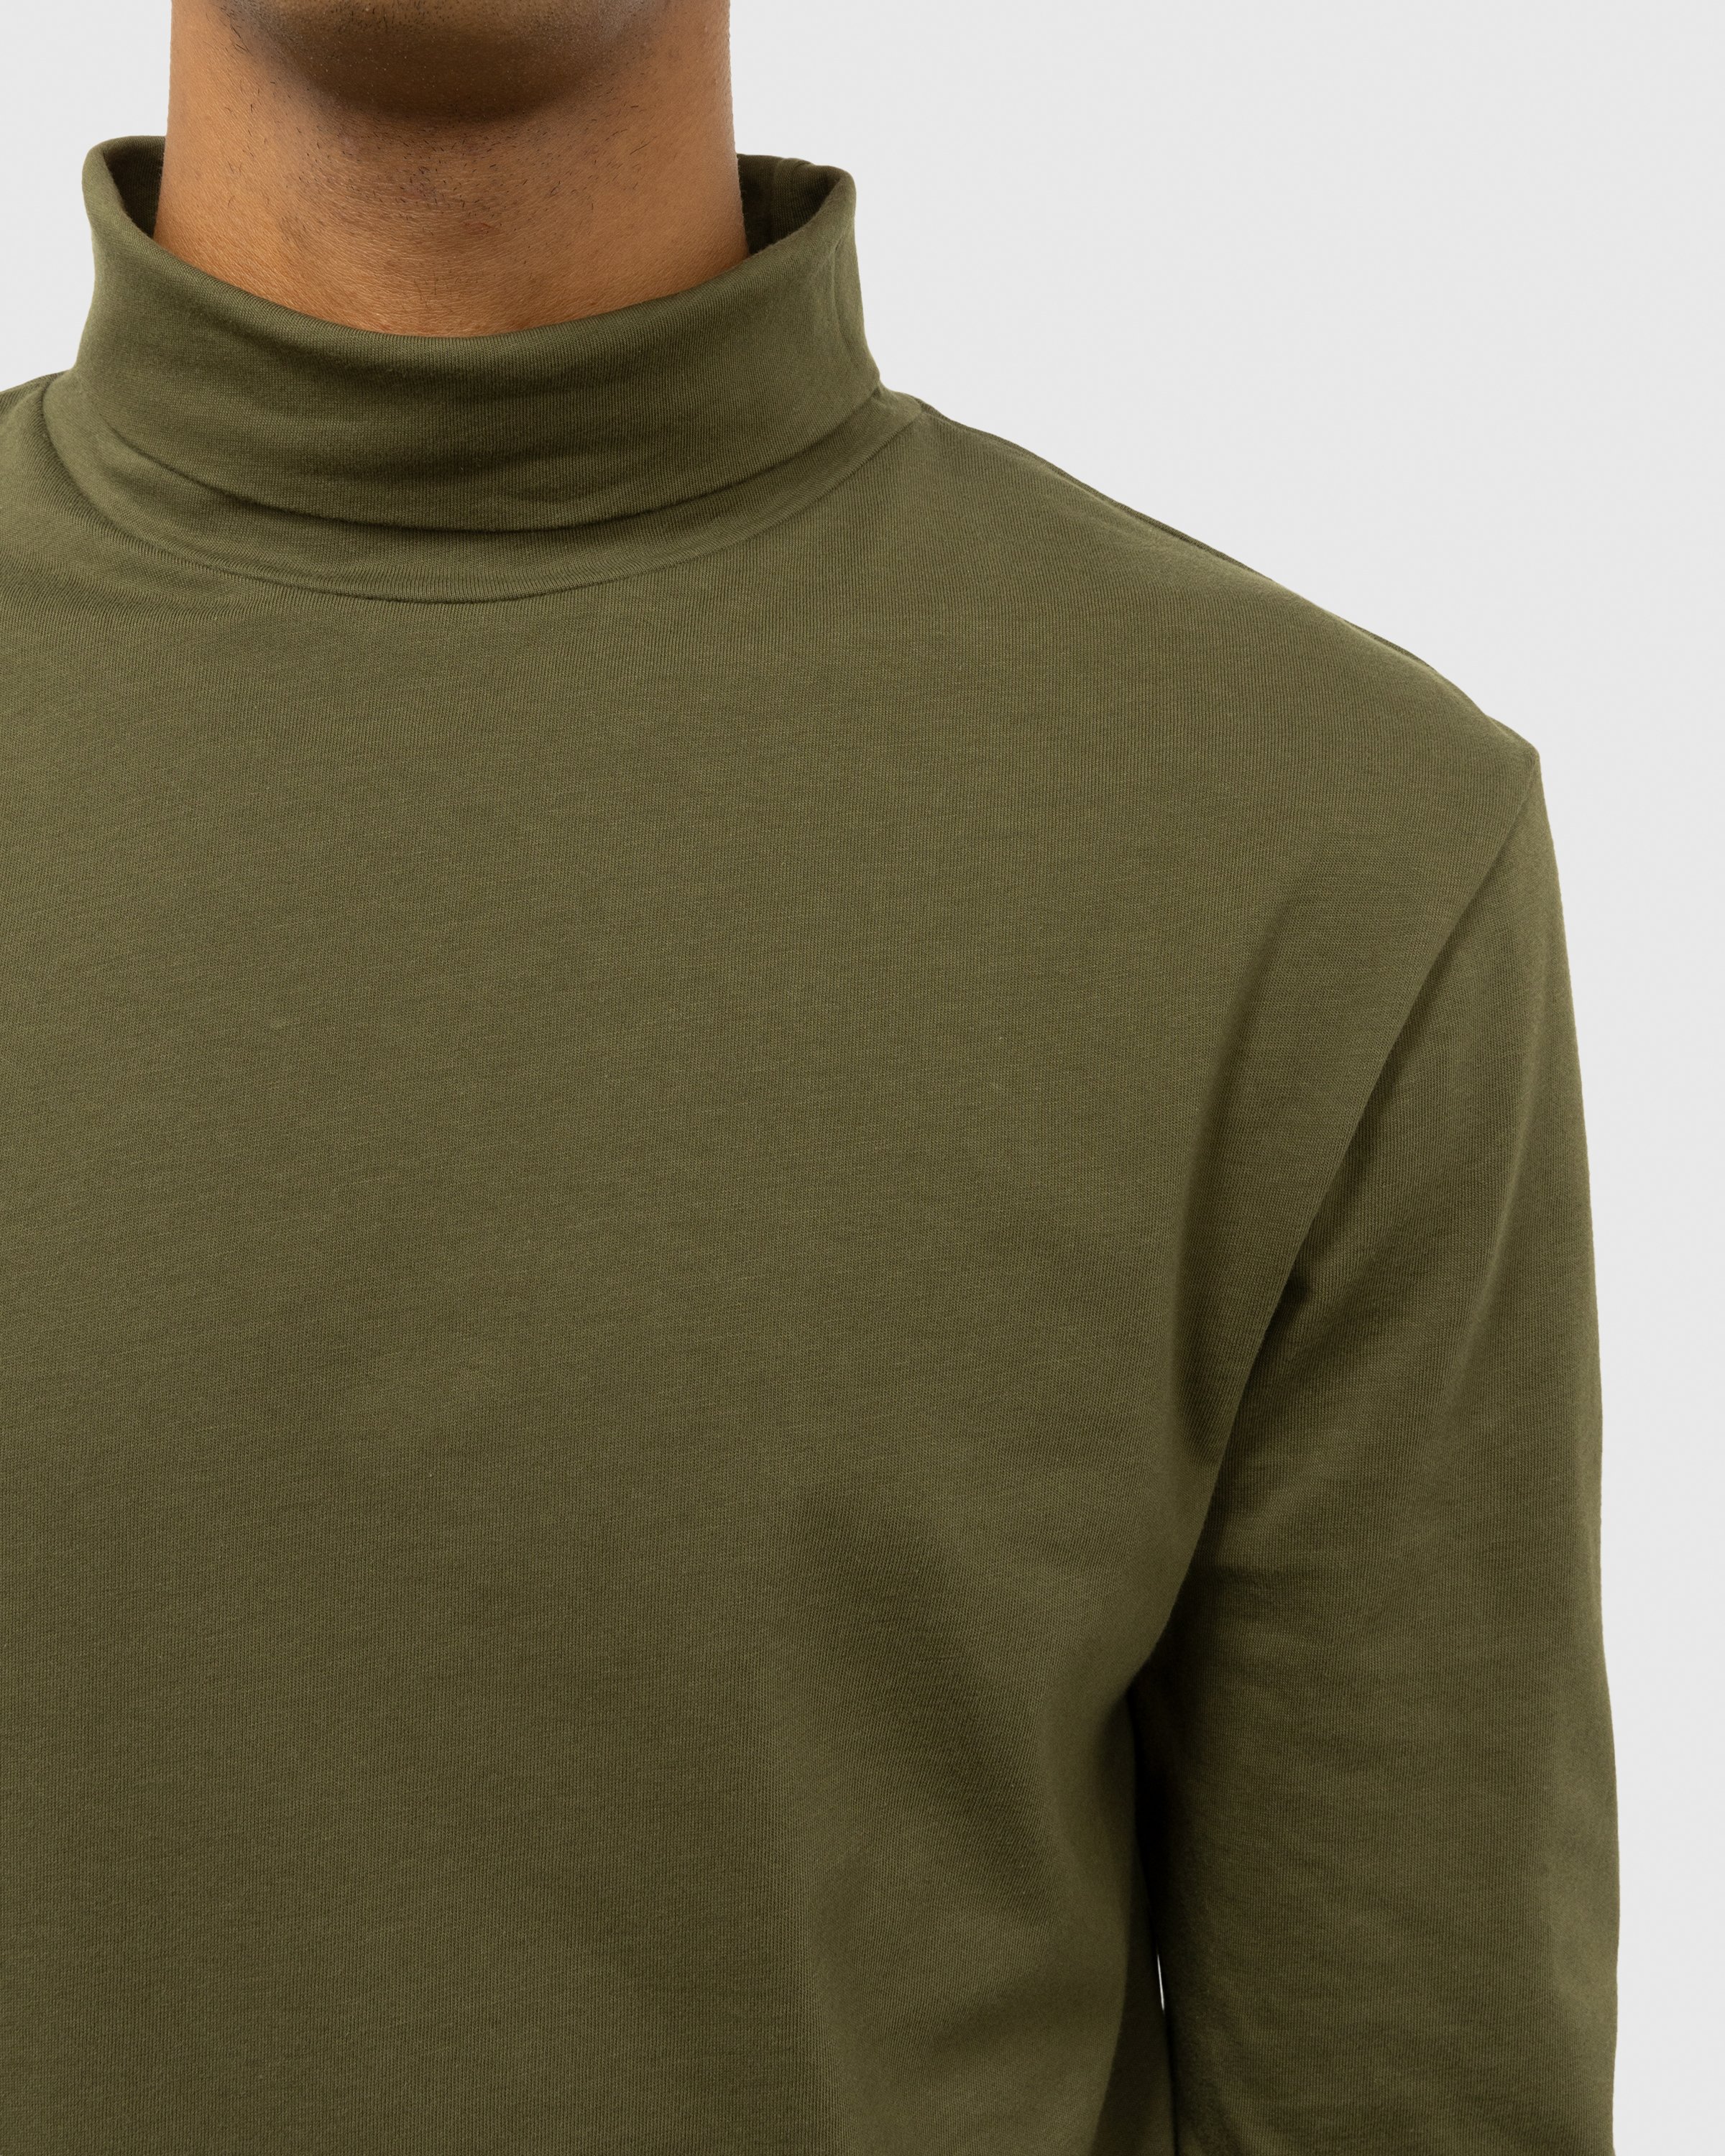 Dries van Noten - Heyzo Turtleneck Jersey Shirt Green - Clothing - Green - Image 5